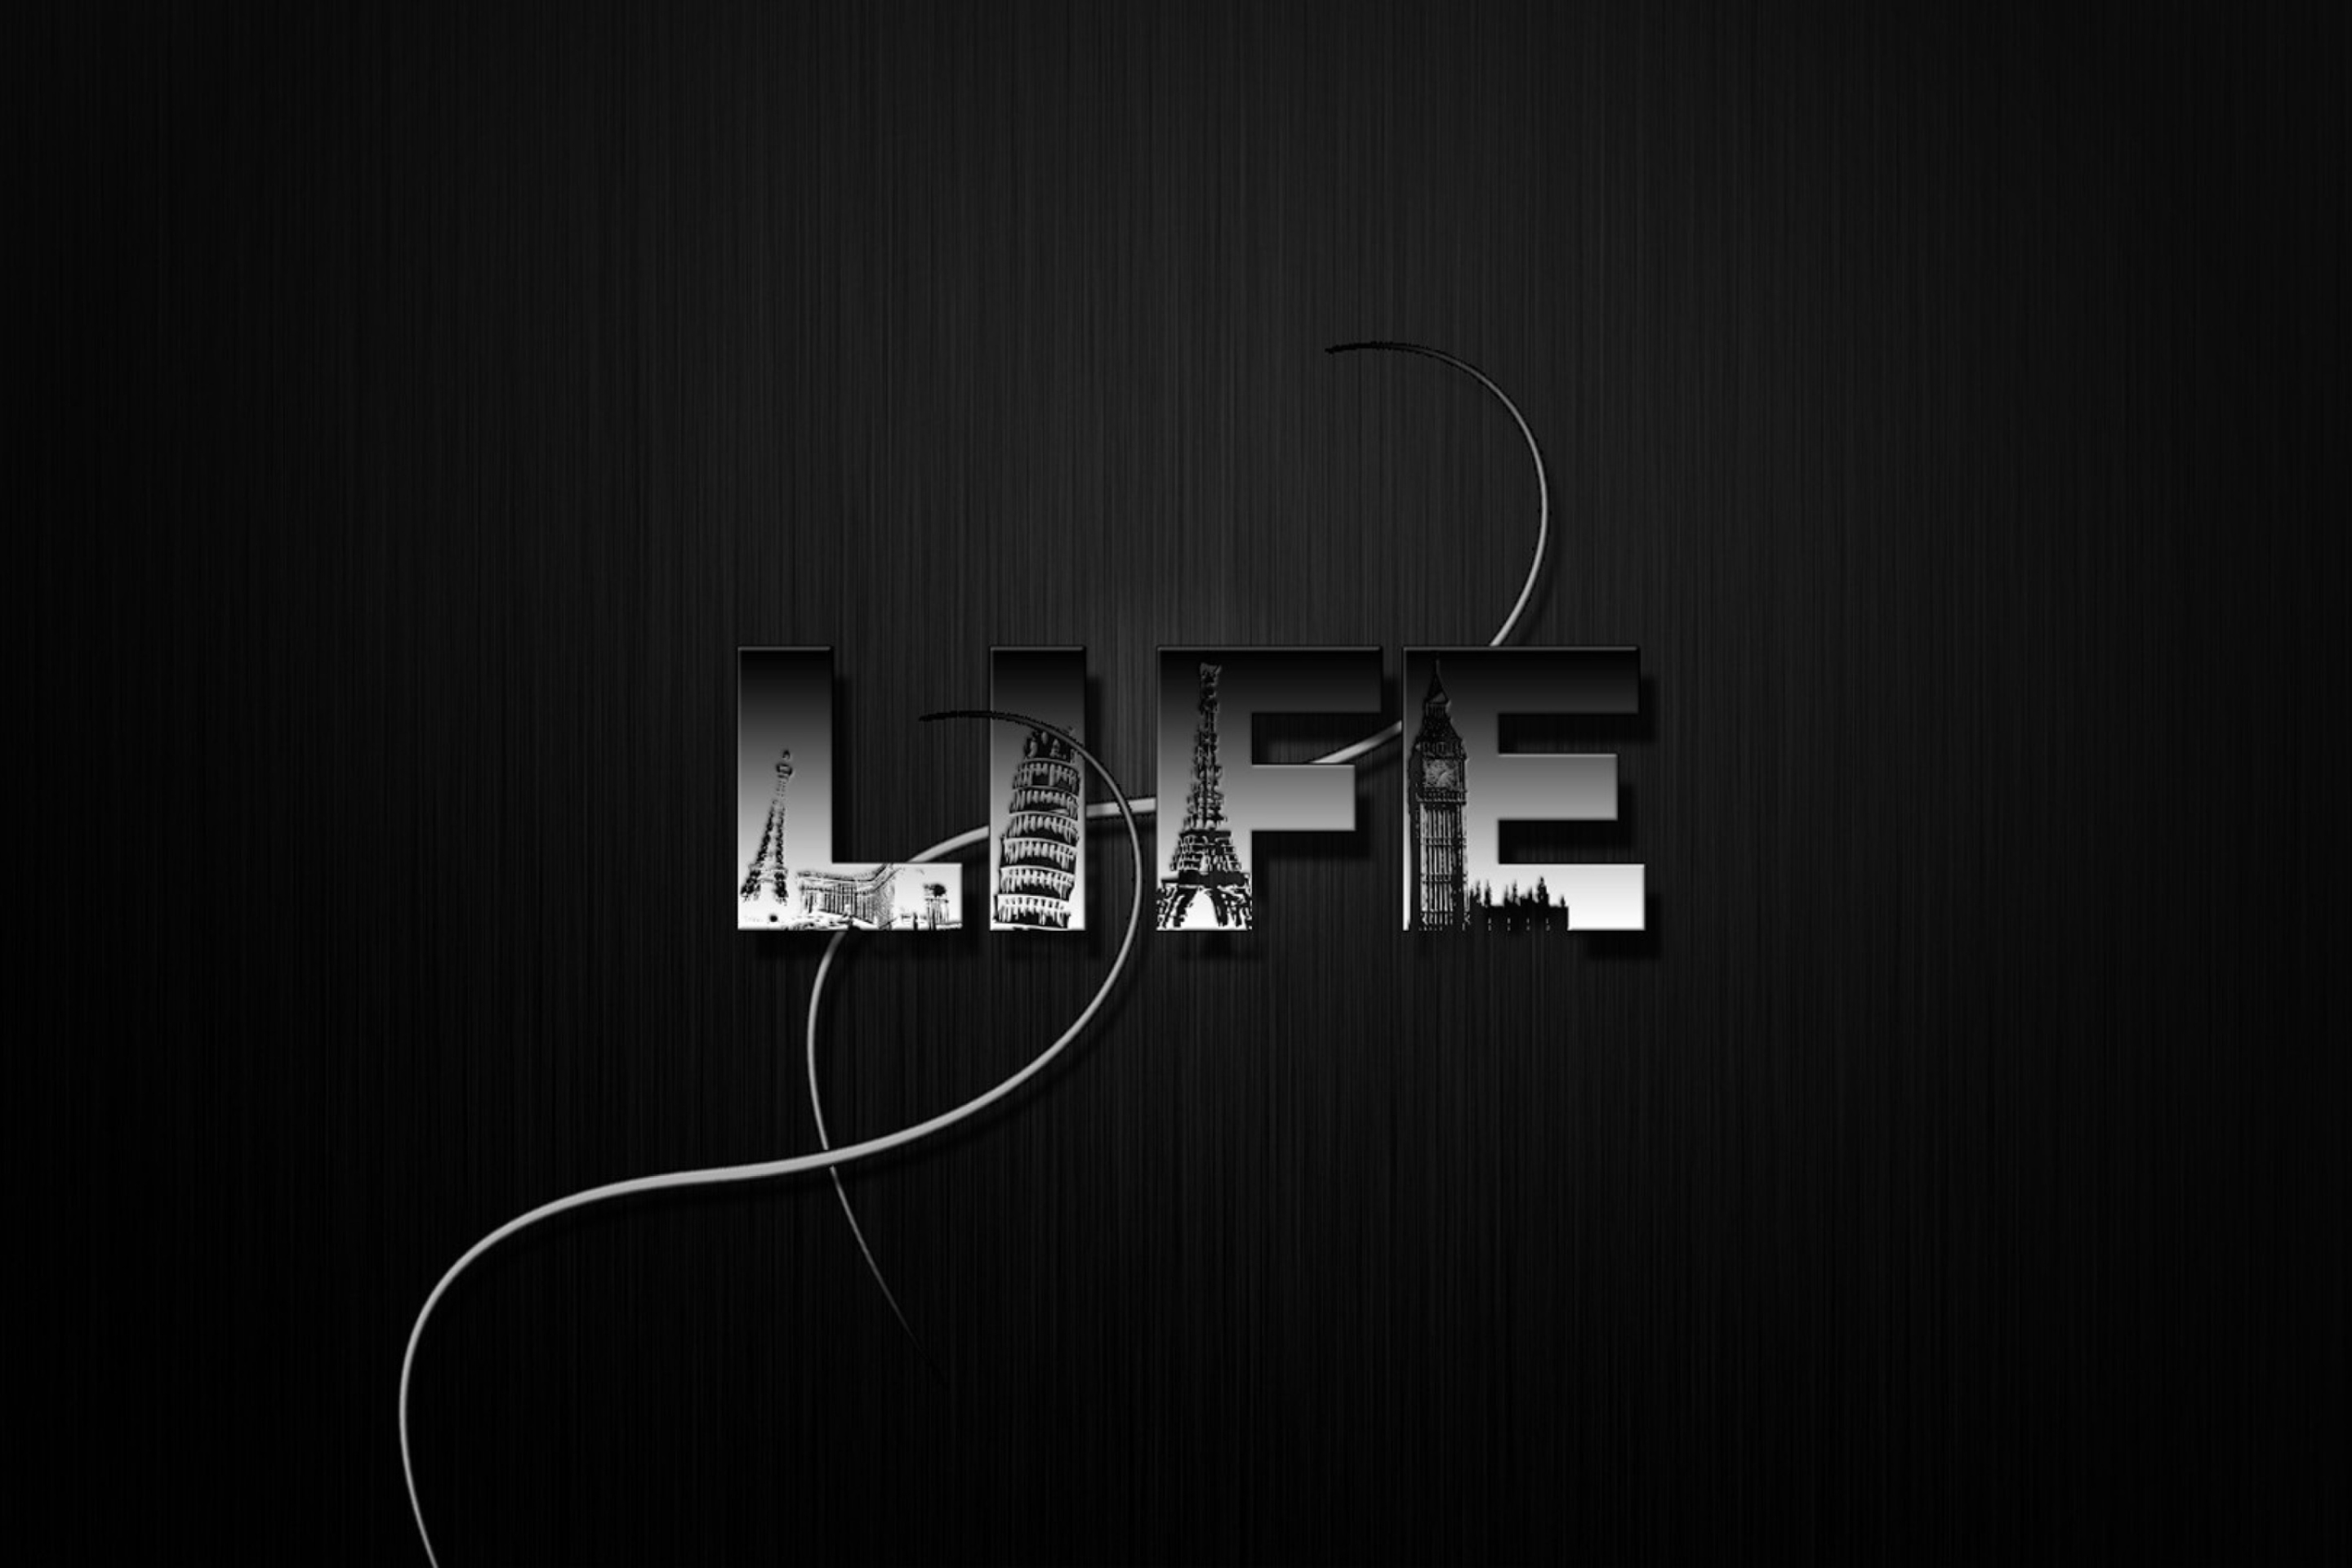 Life 4 music